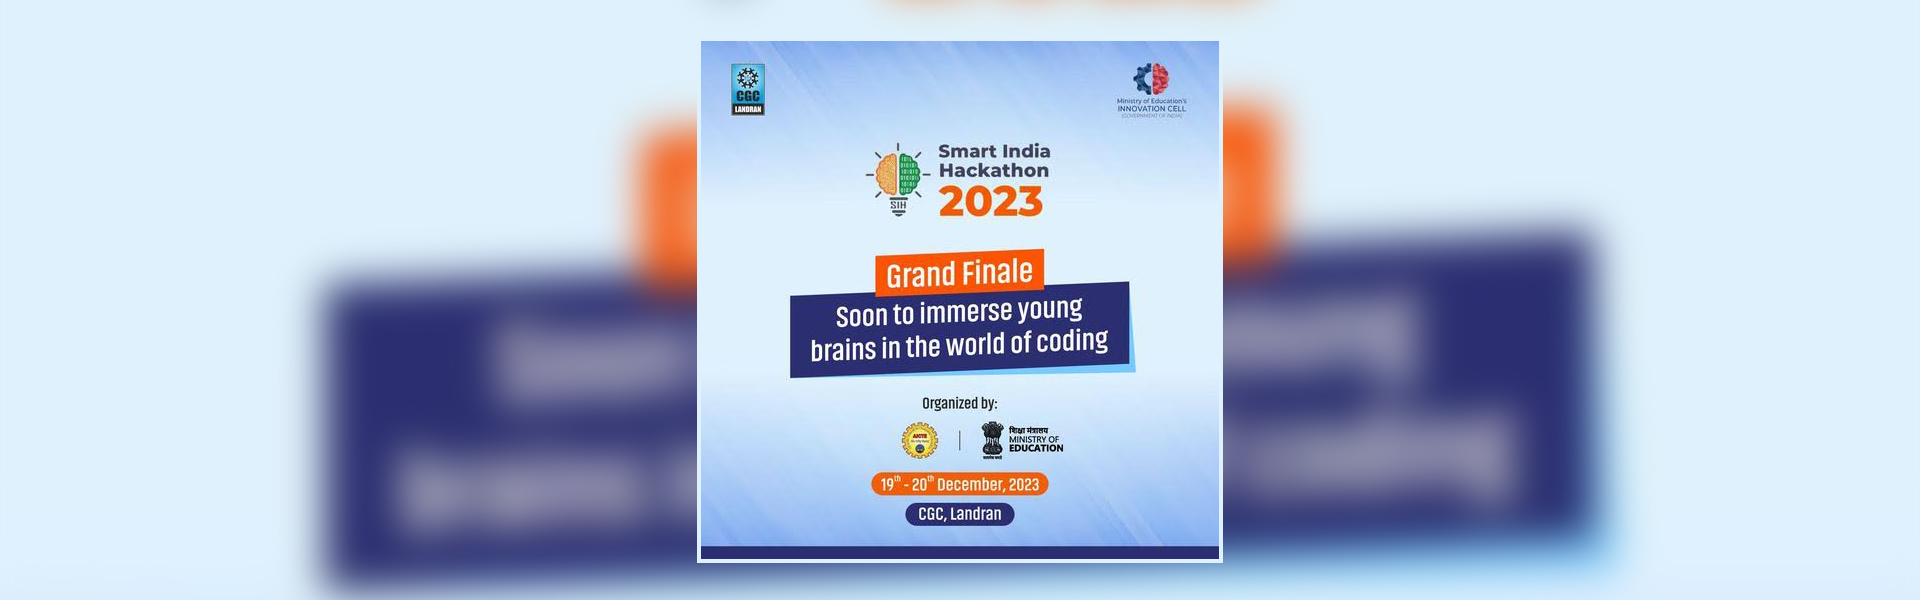 Smart India Hackathon - 2023 